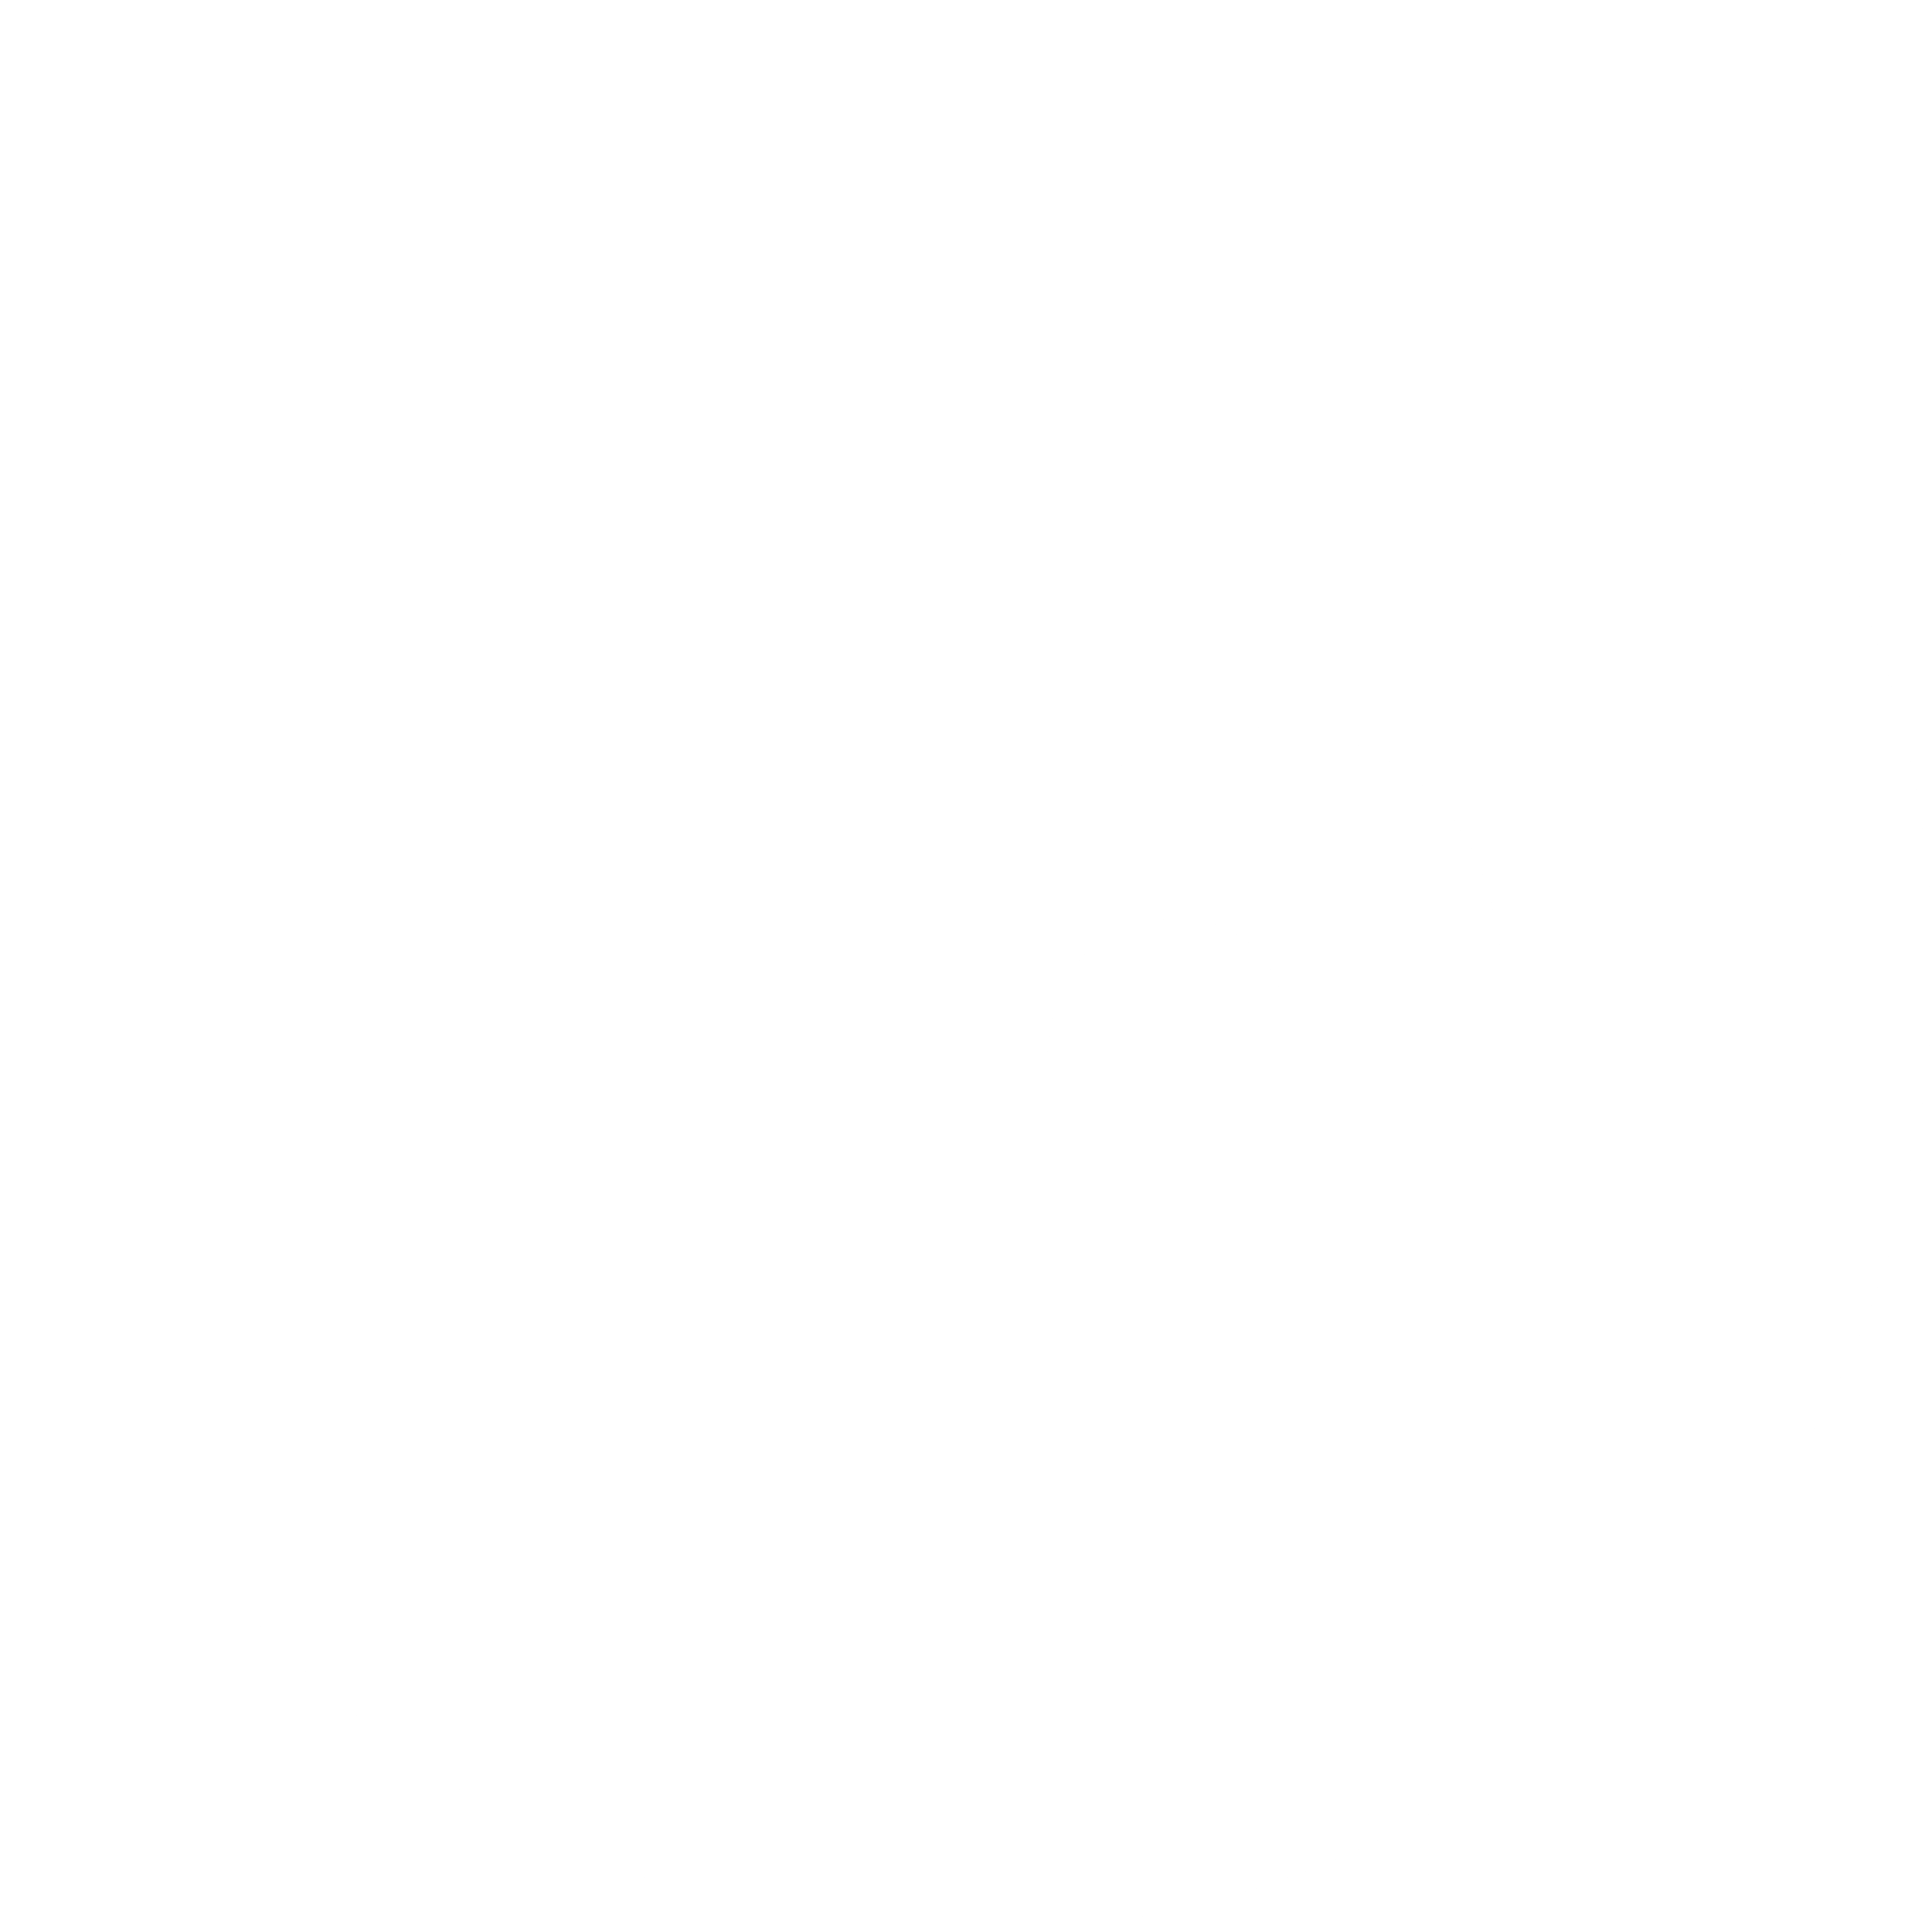 LinkedIn Icon Vector Logo - 1 Linkedin transparent icon white for free download on YA-webdesign